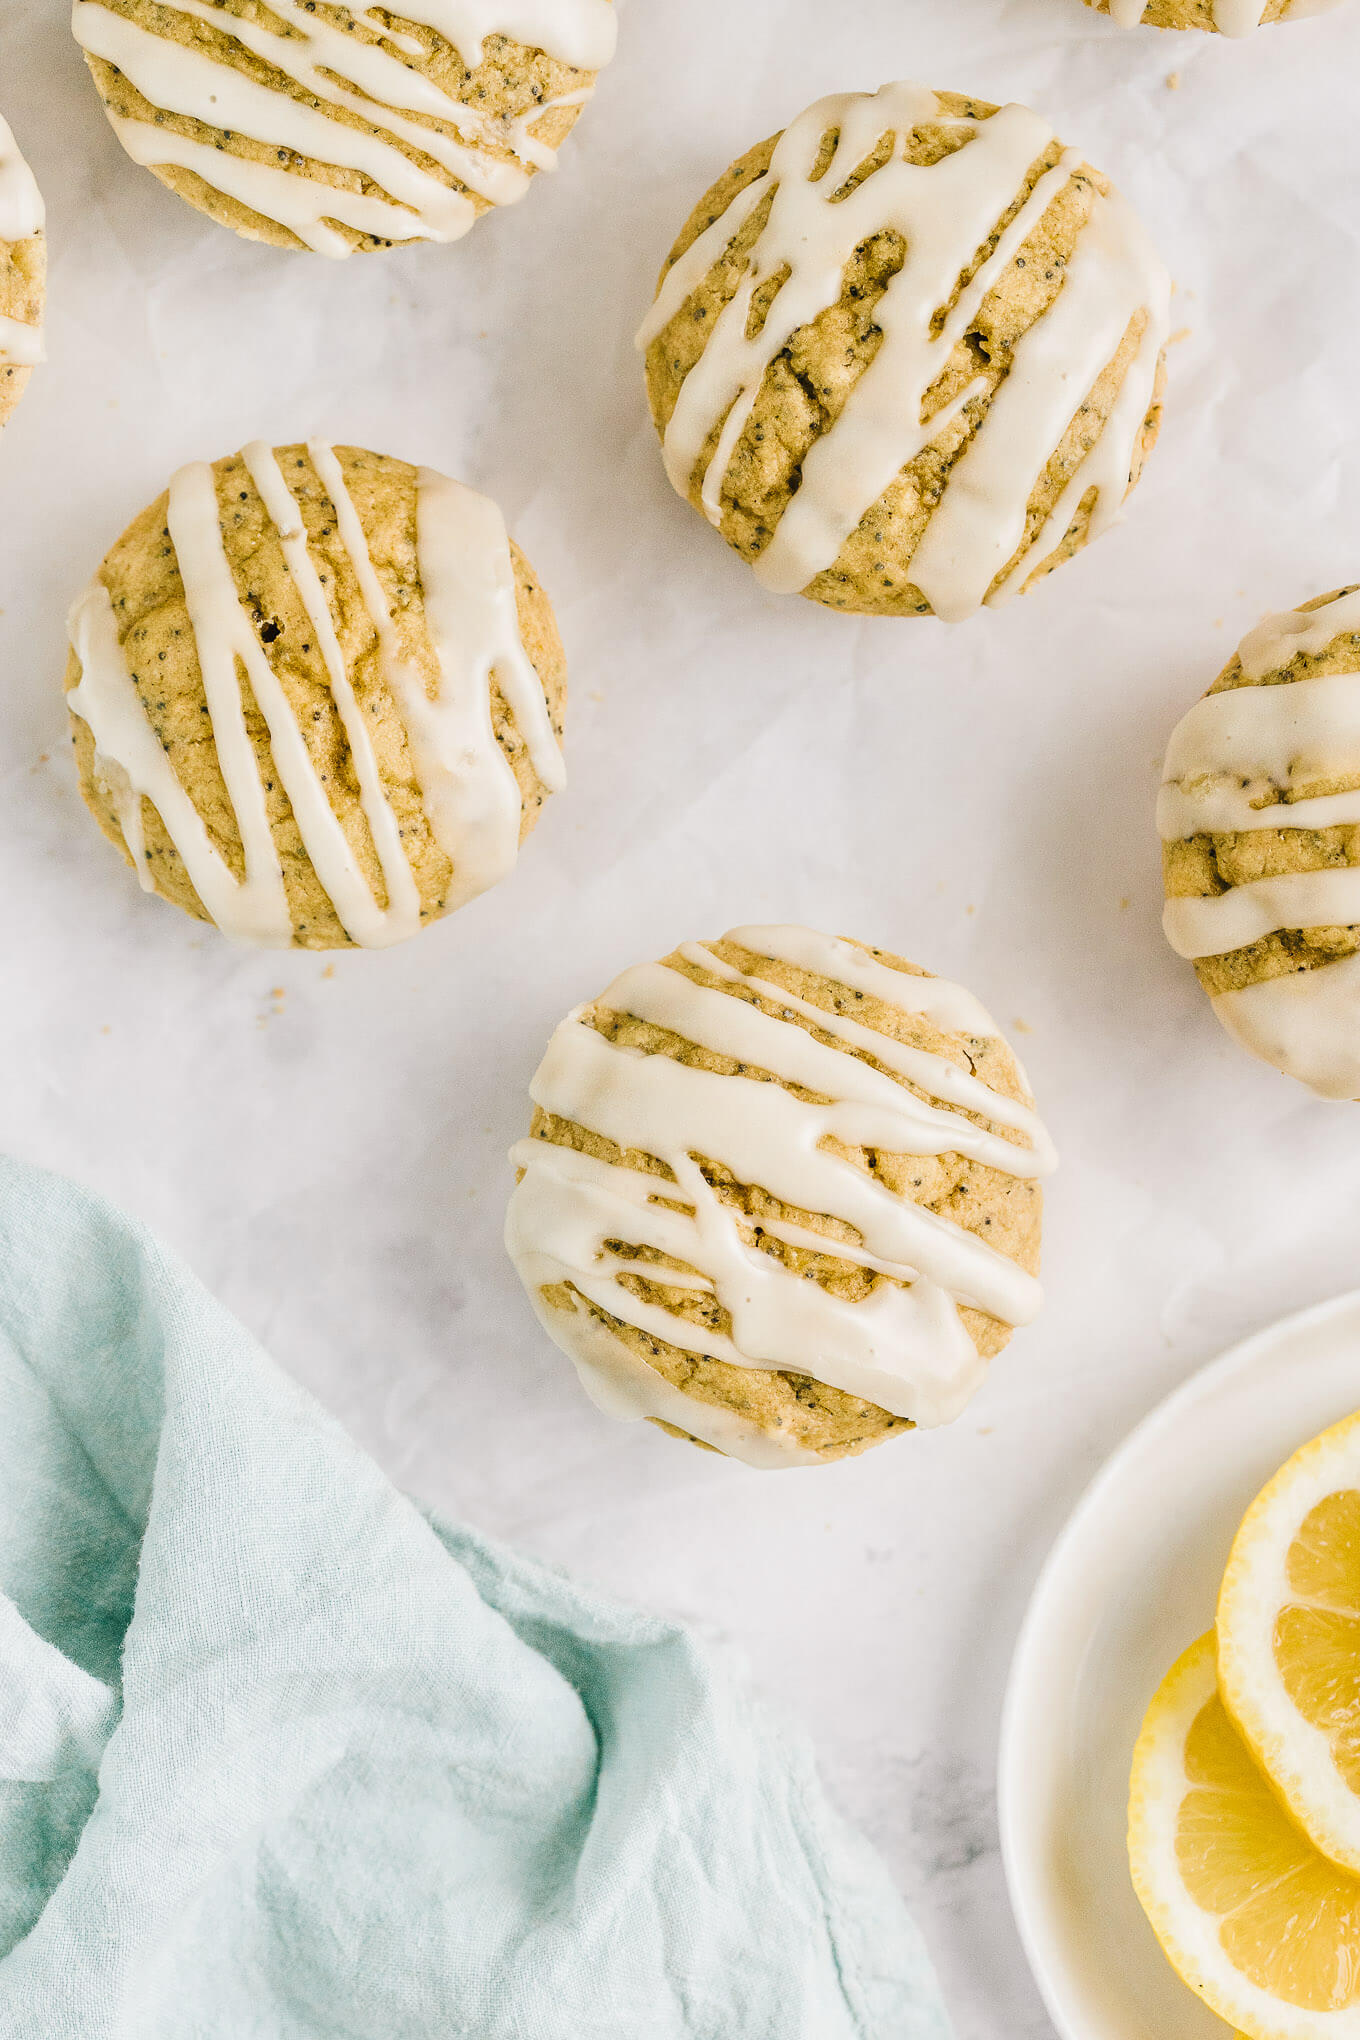 Healthy lemon poppy seed muffins with glaze